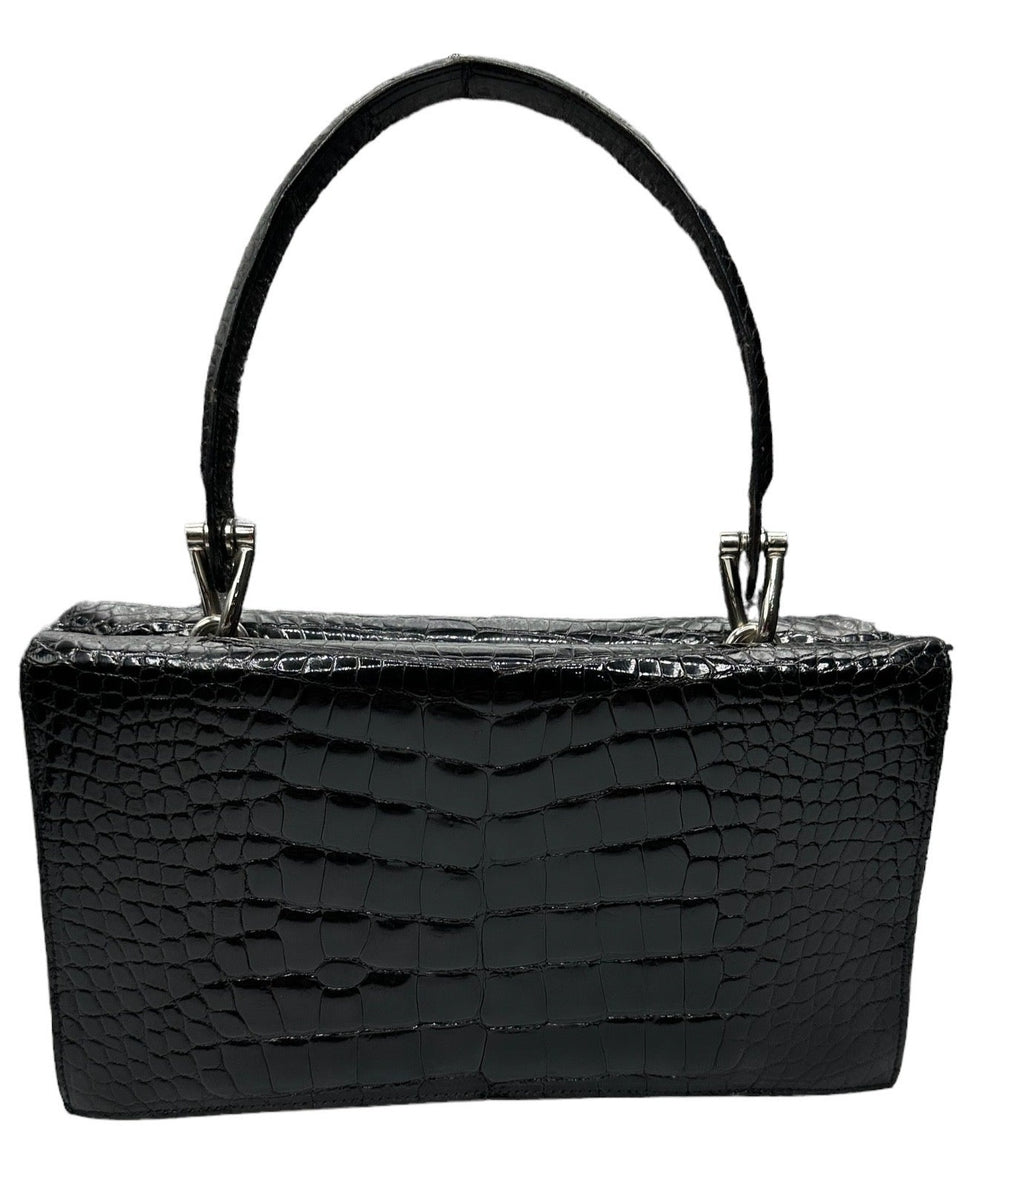 Gianfranco Ferre Black Baby Alligator Handbag  FRONT 1 of 5